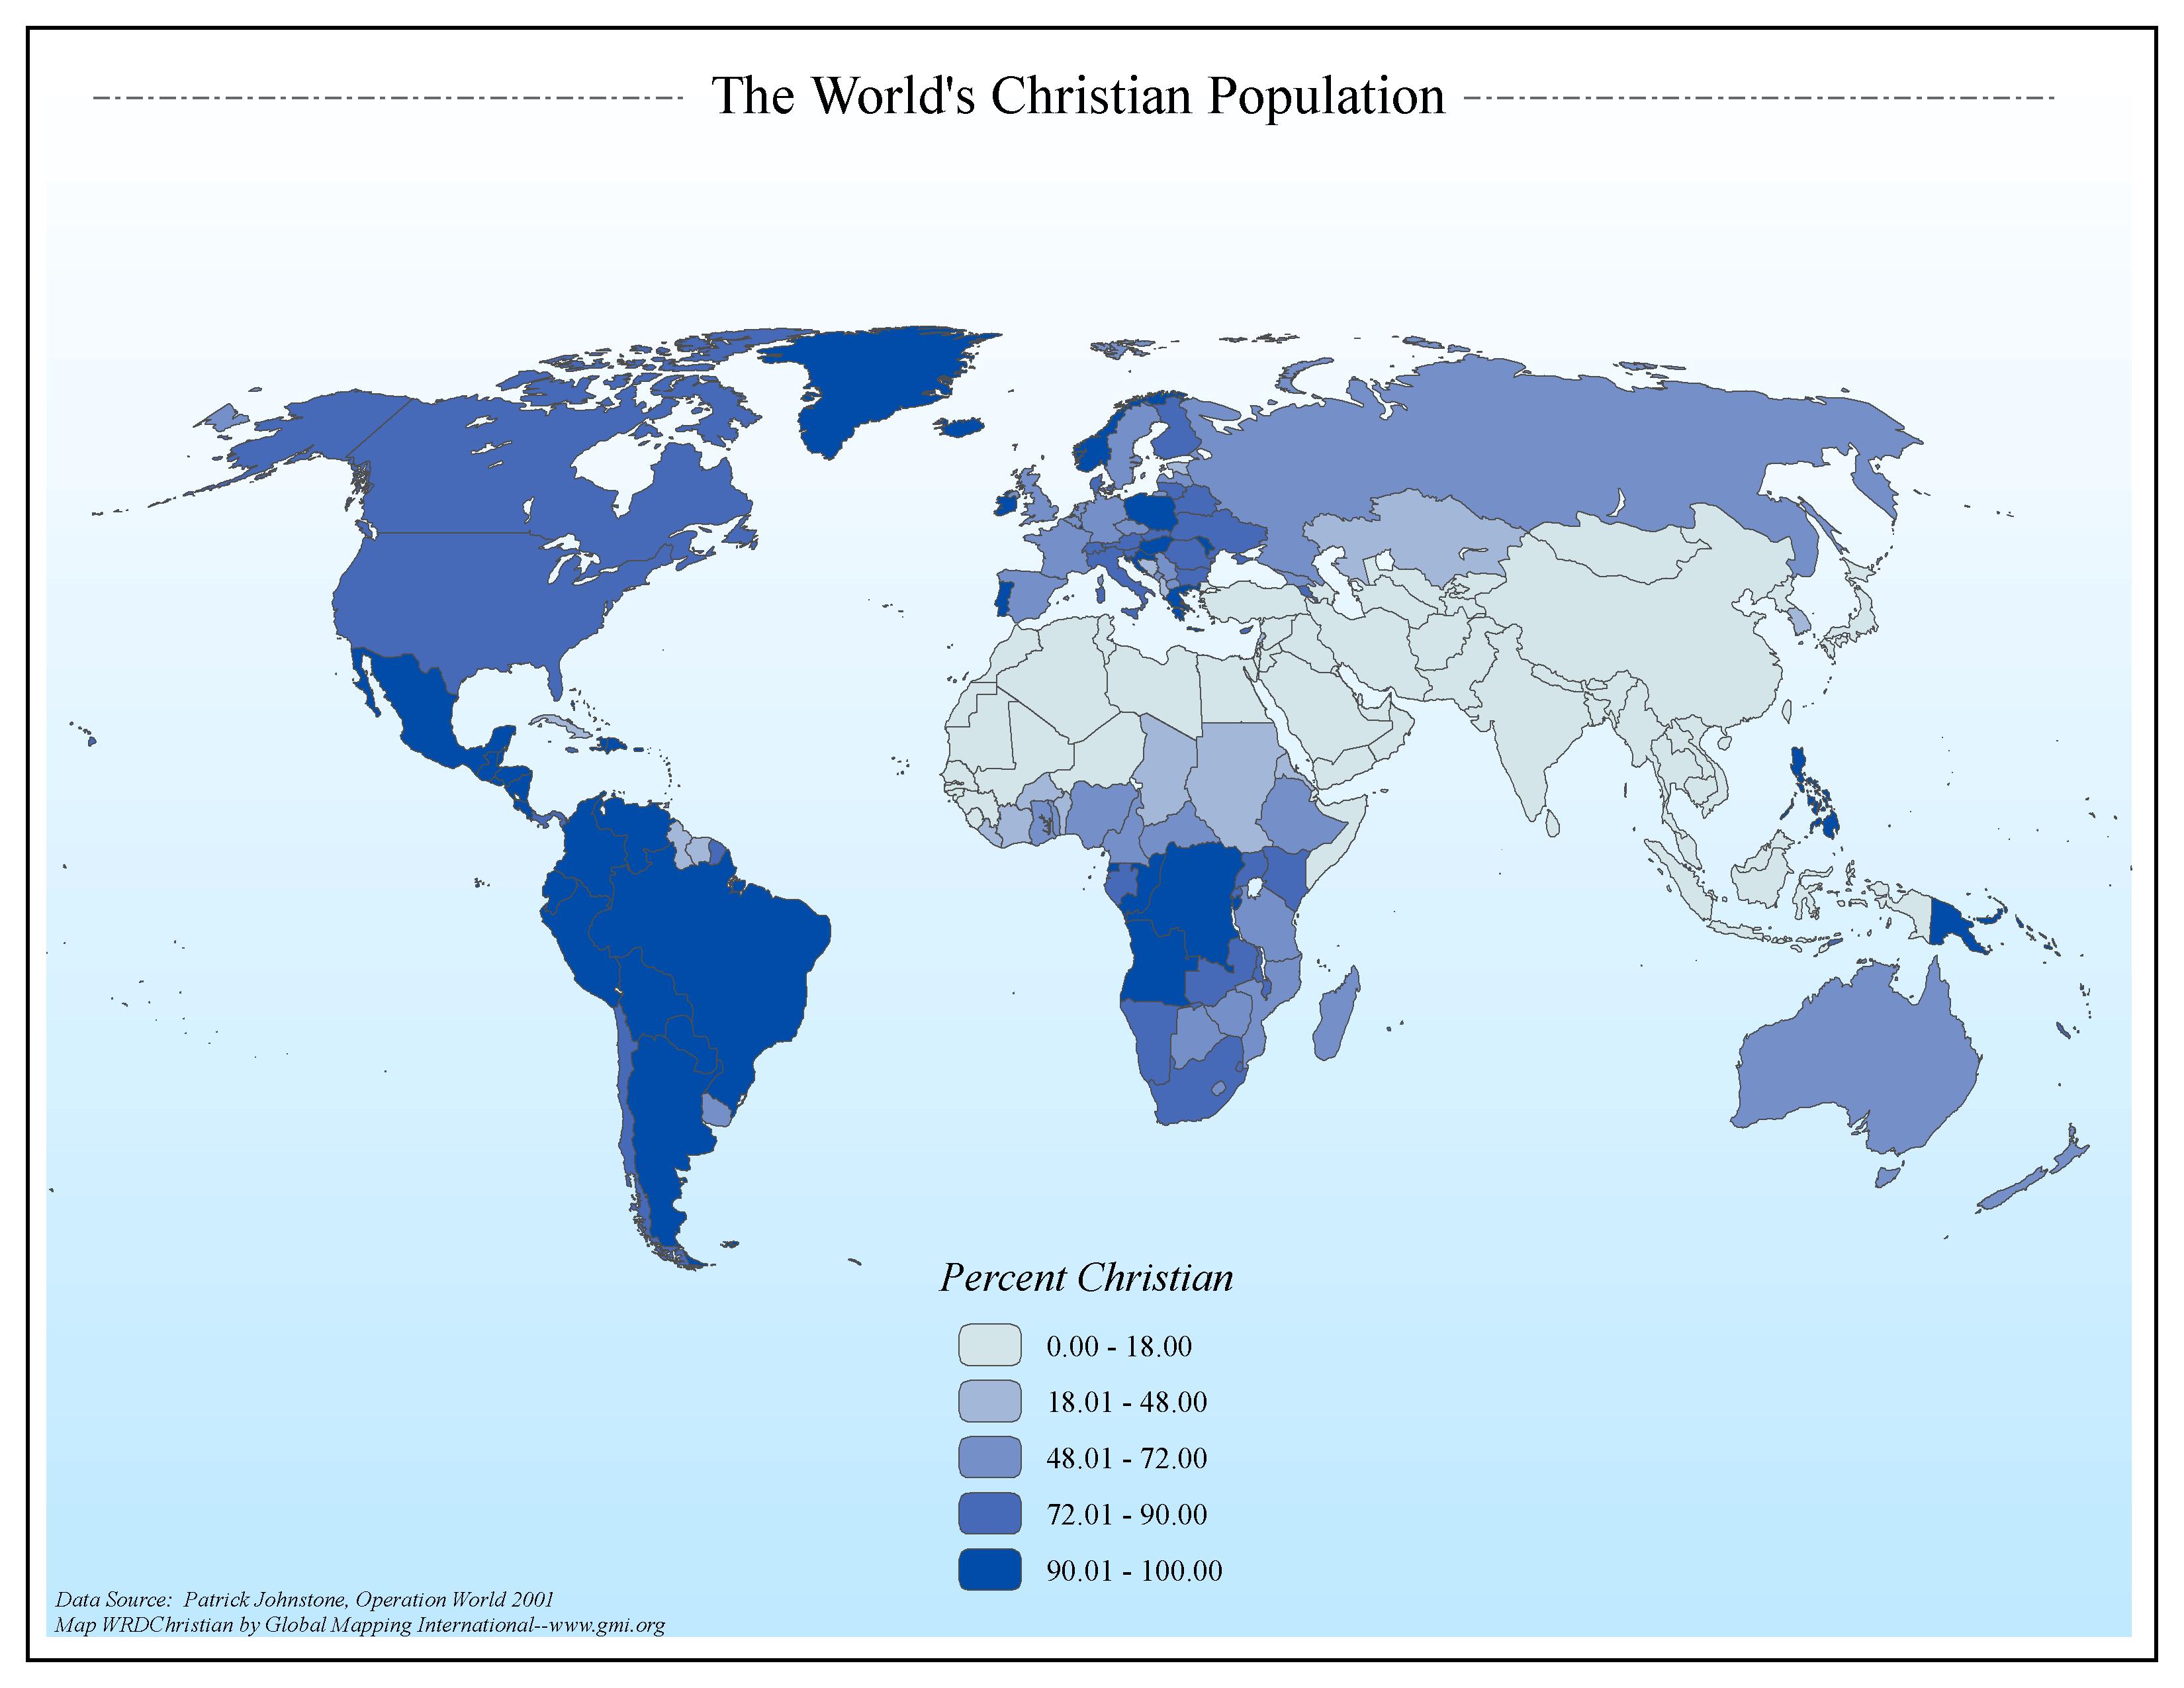 The World's Christian Population